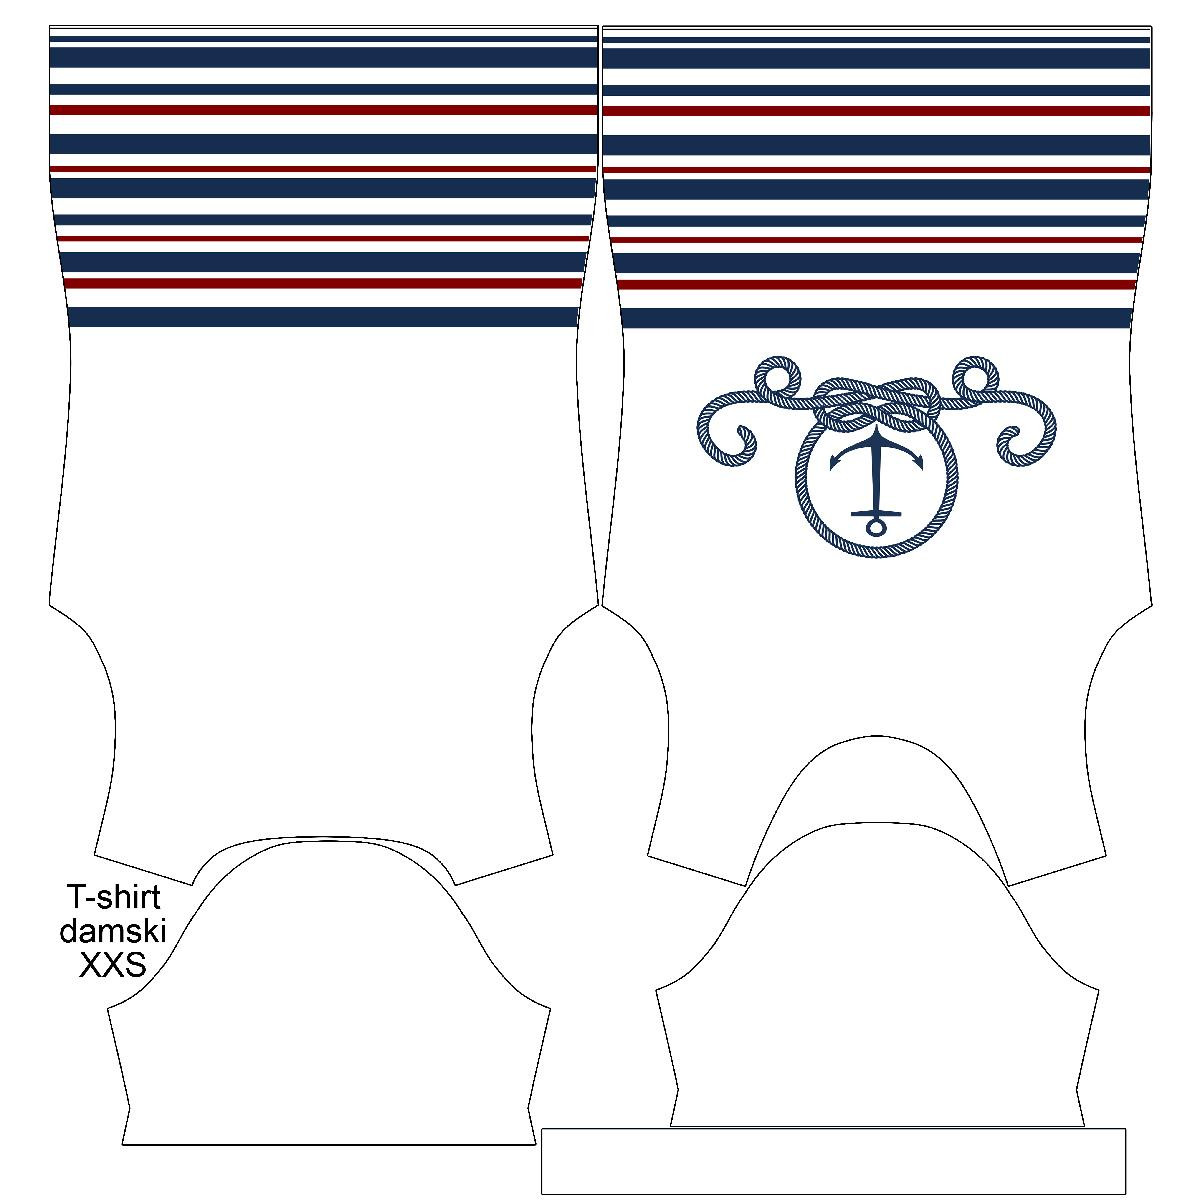 T-SHIRT DAMSKI - KOTWICA / paski (marine) - single jersey